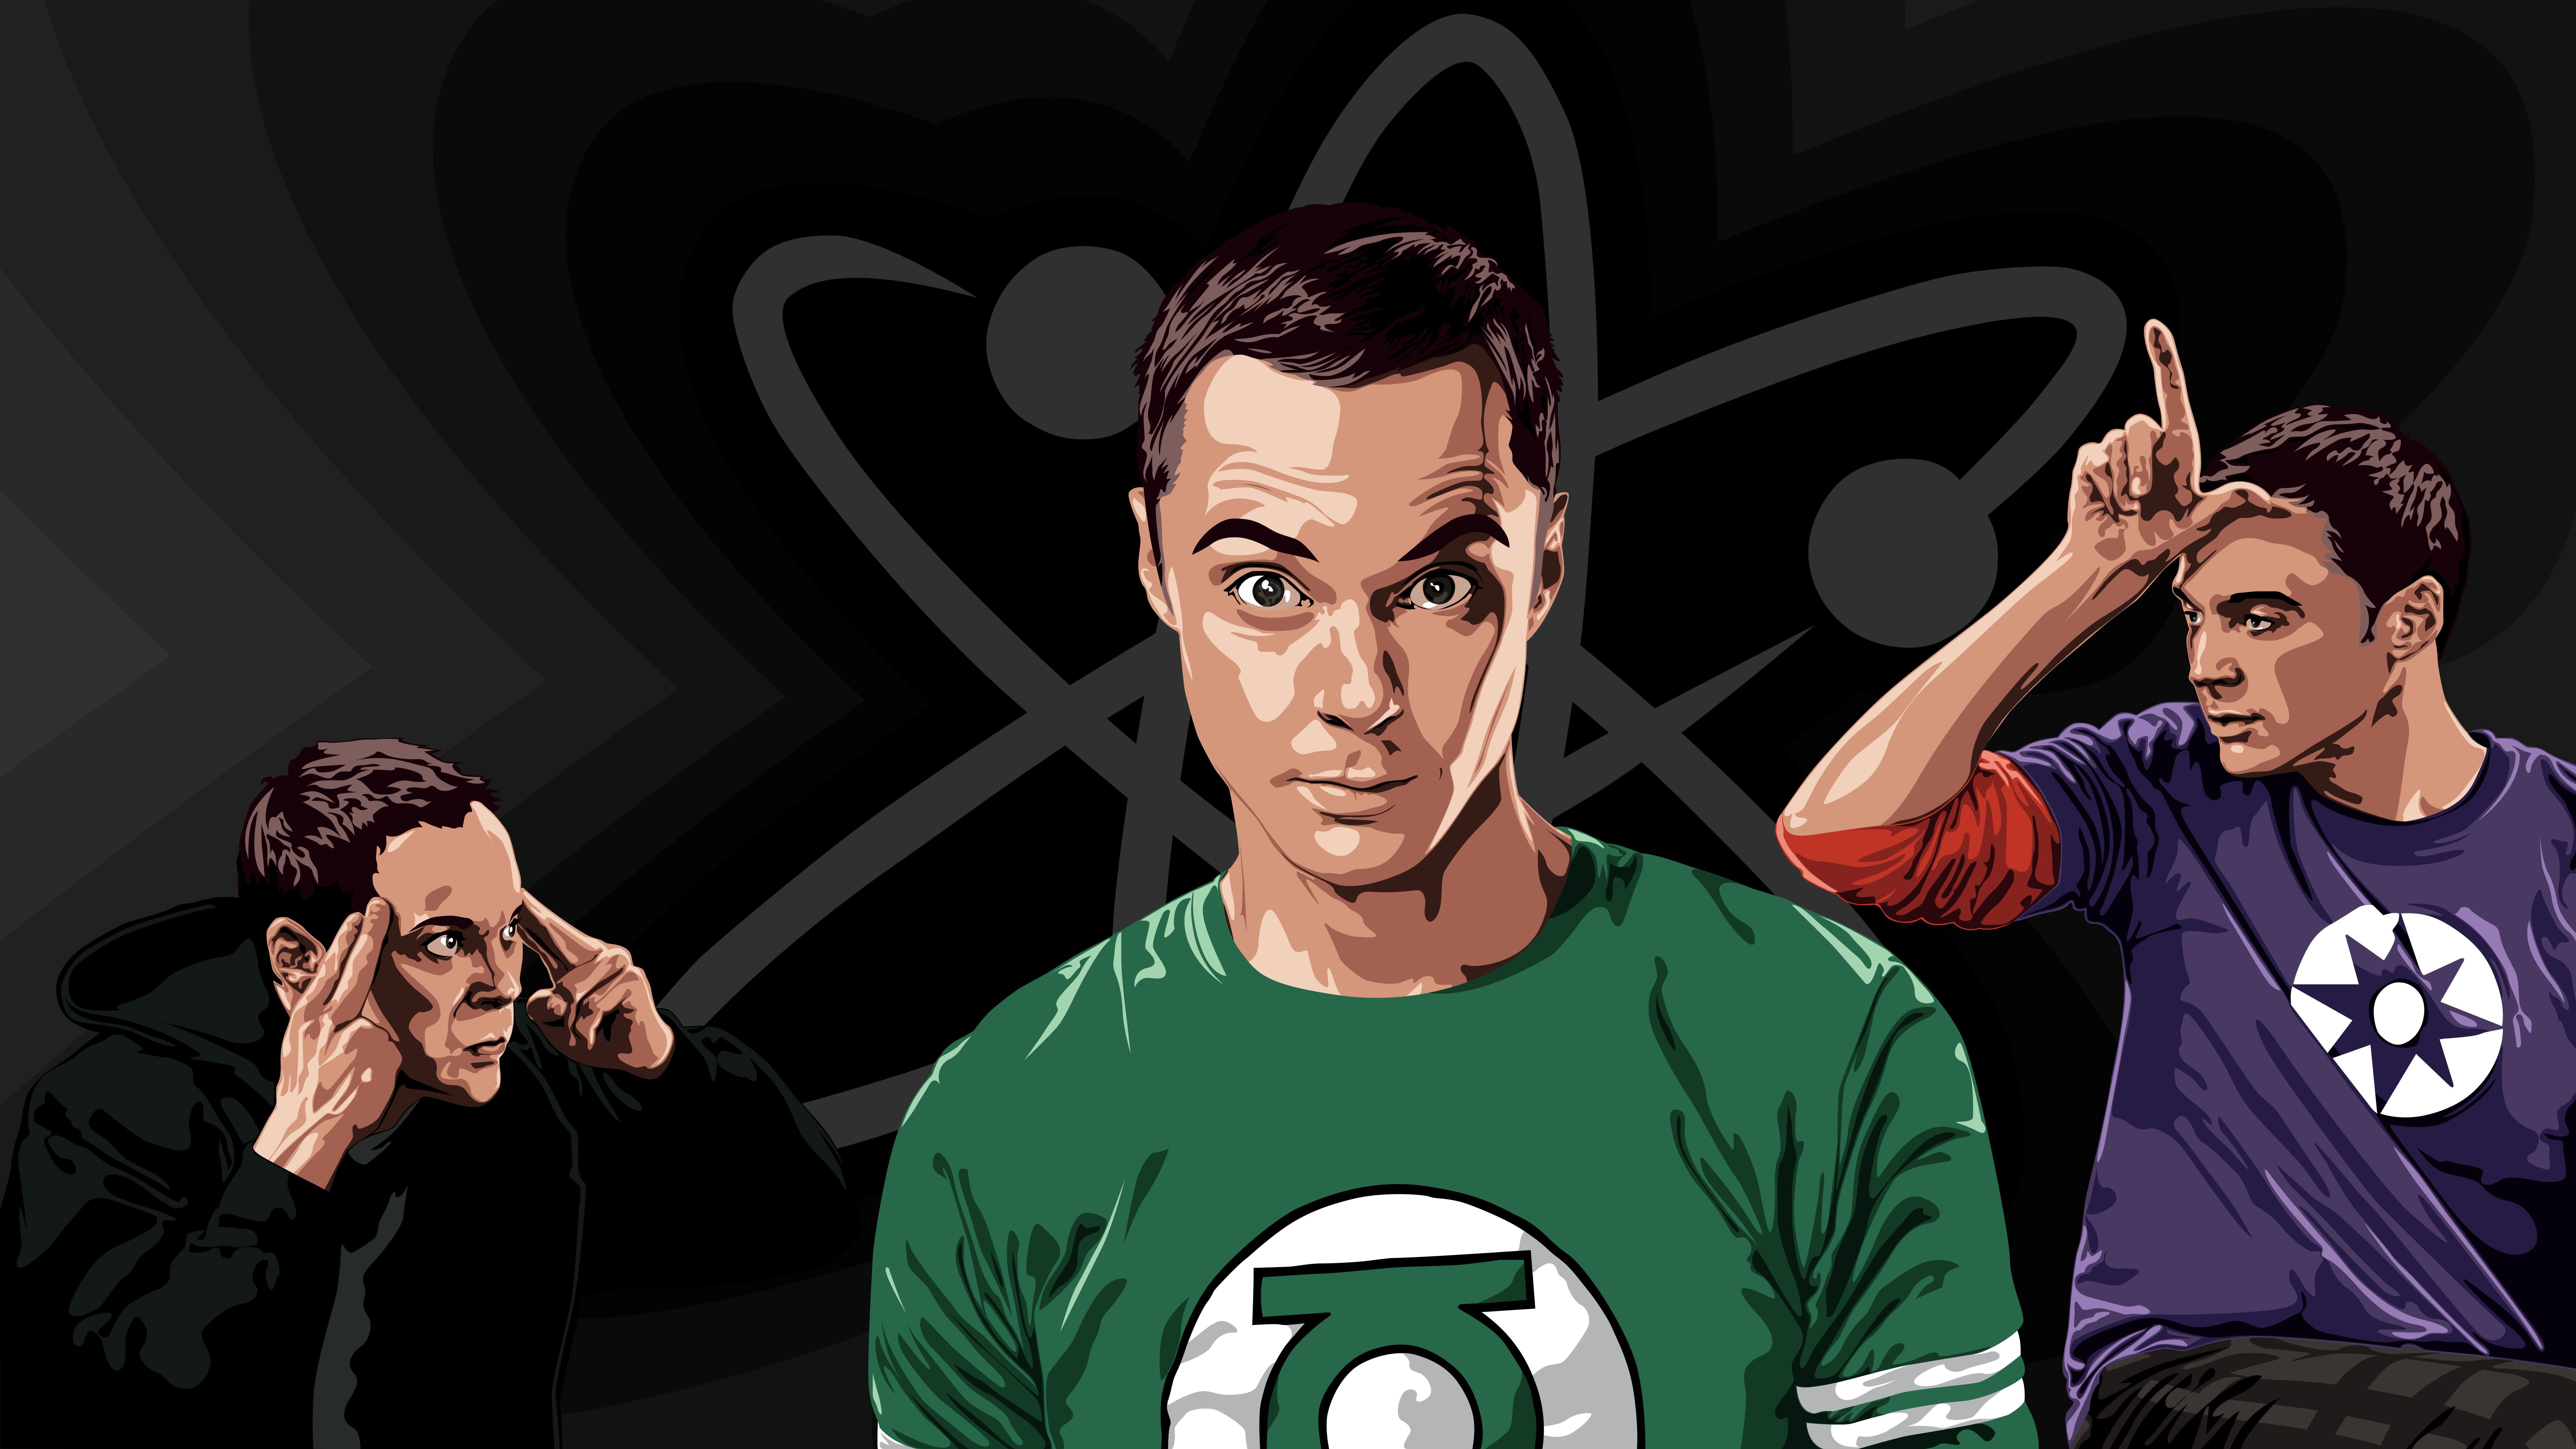 Sheldon Cooper illustration, Sheldon Cooper, The Big Bang Theory, TV